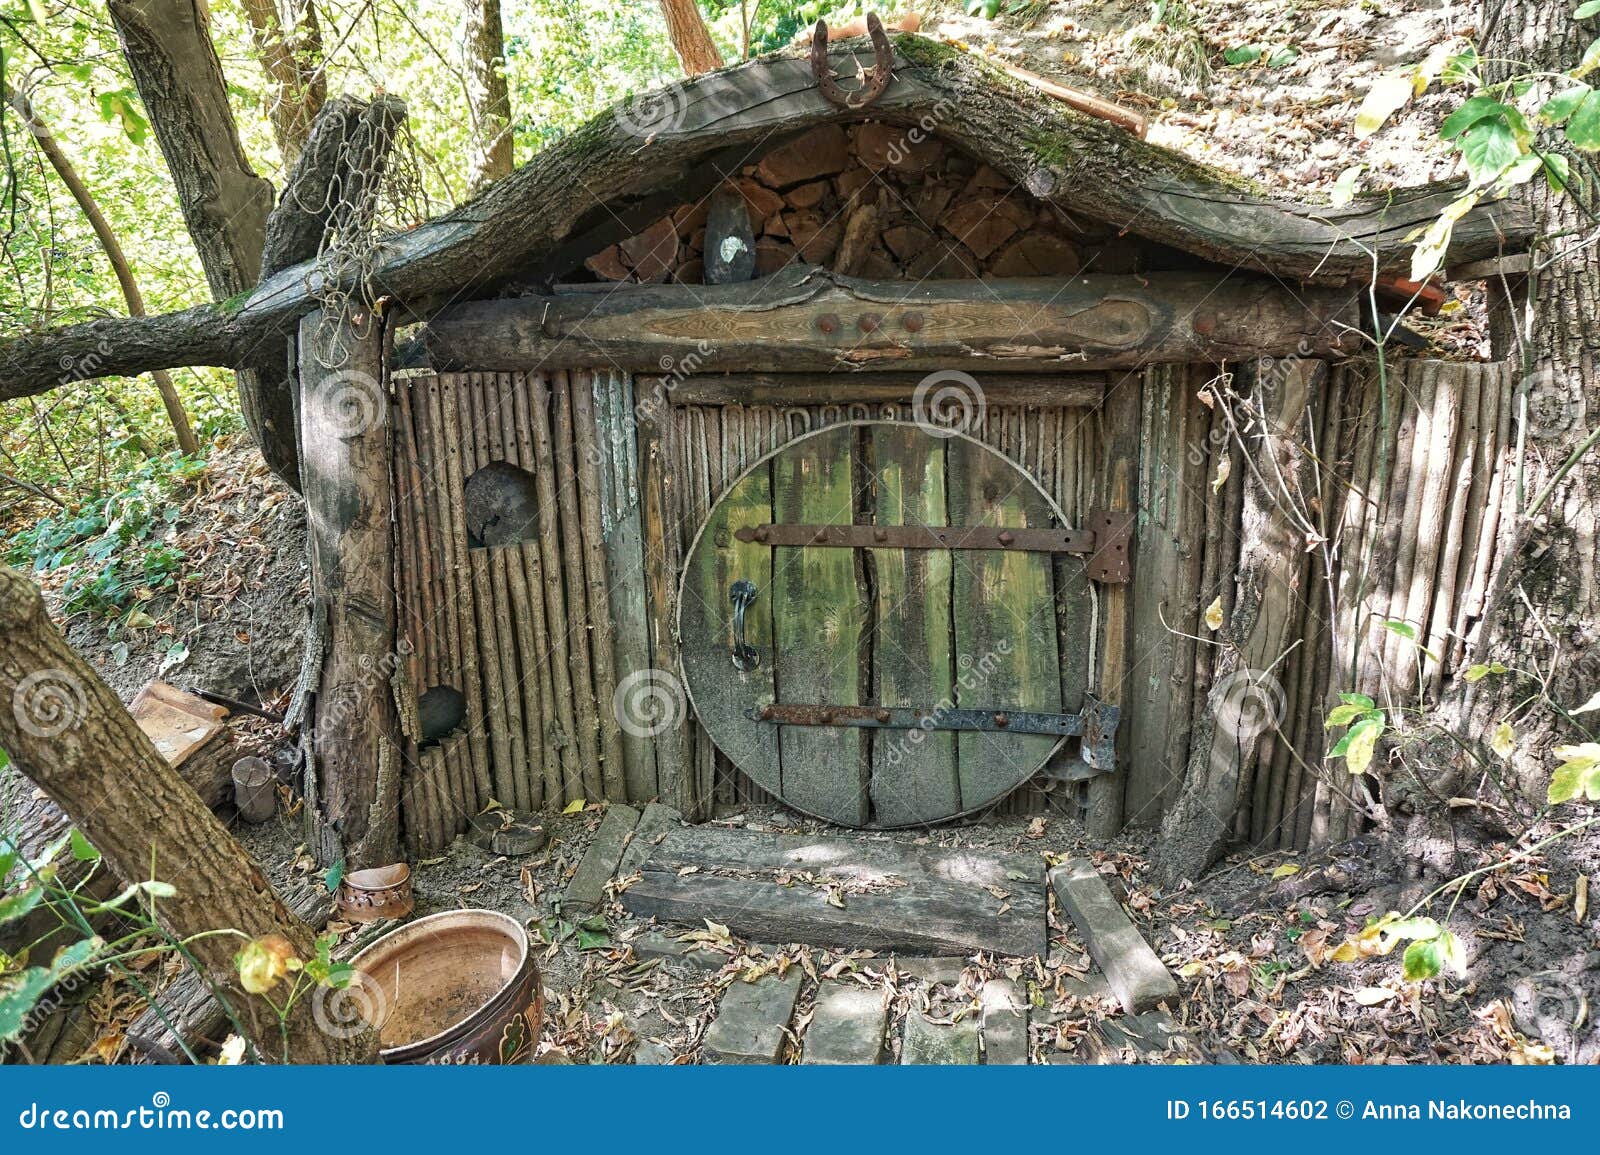 wooden hobbit house made for children games